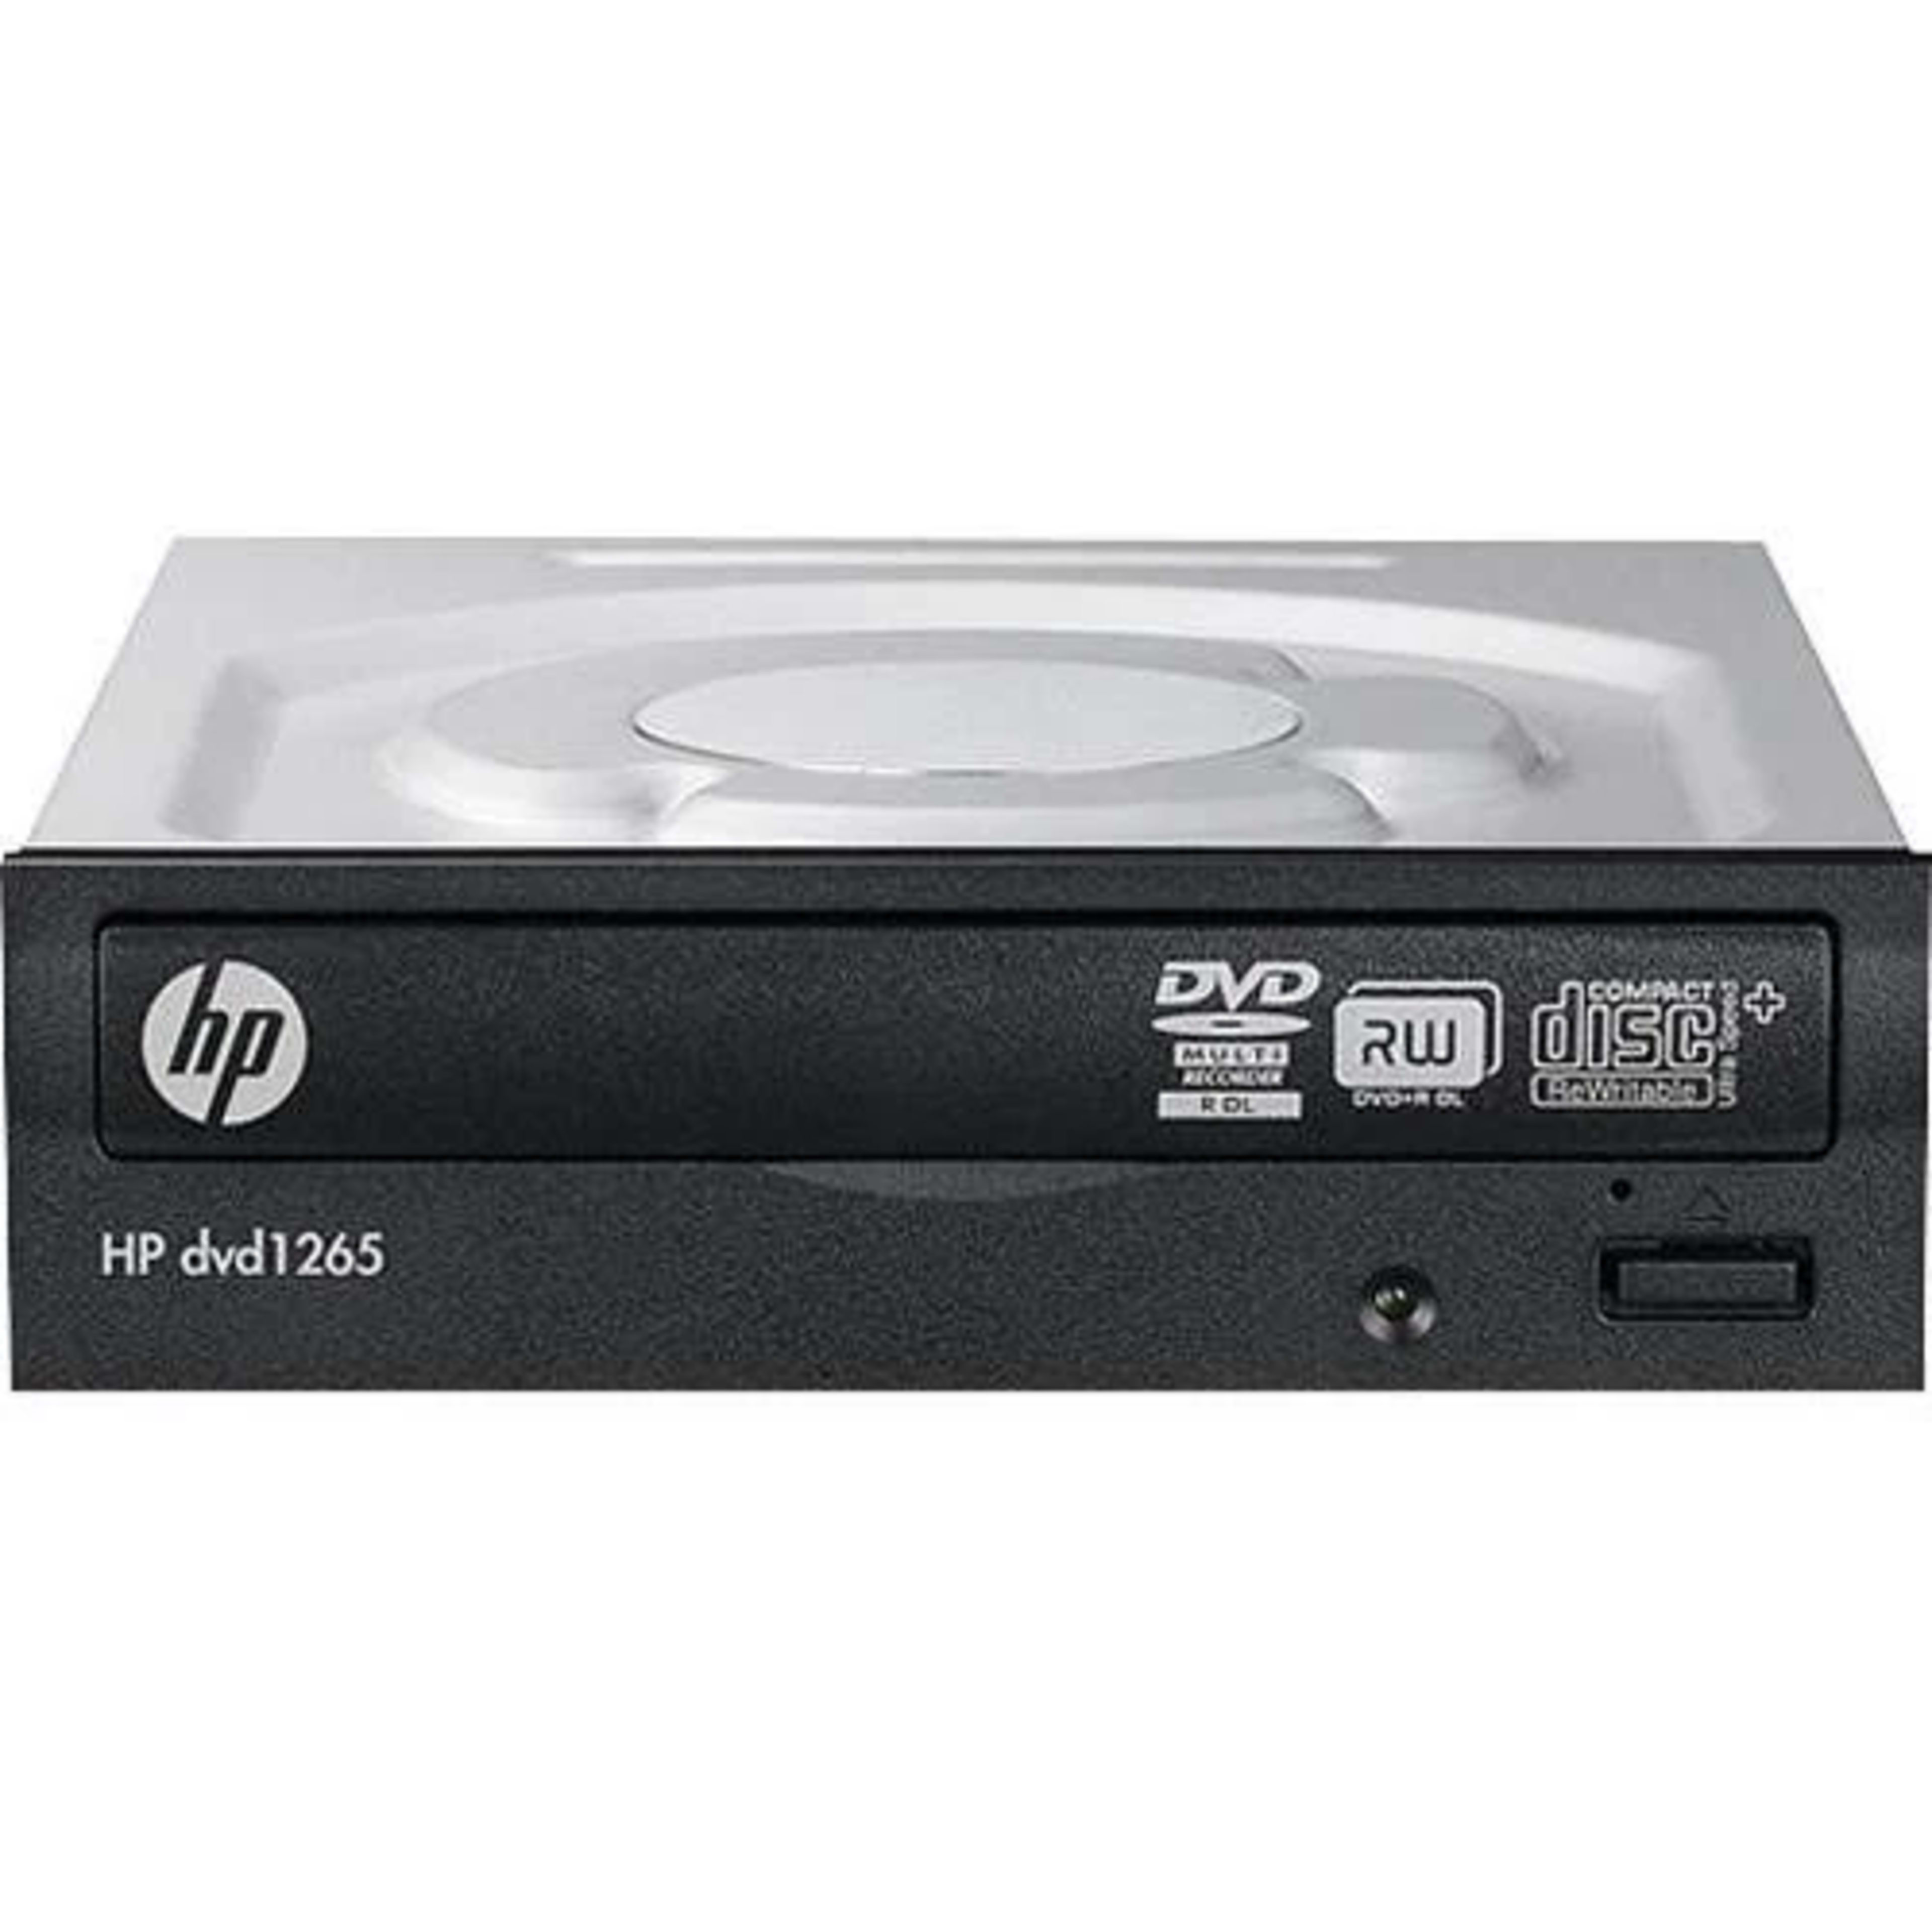 Pre-owned HP 24x Internal DVD / CD Writer Model DVD1265